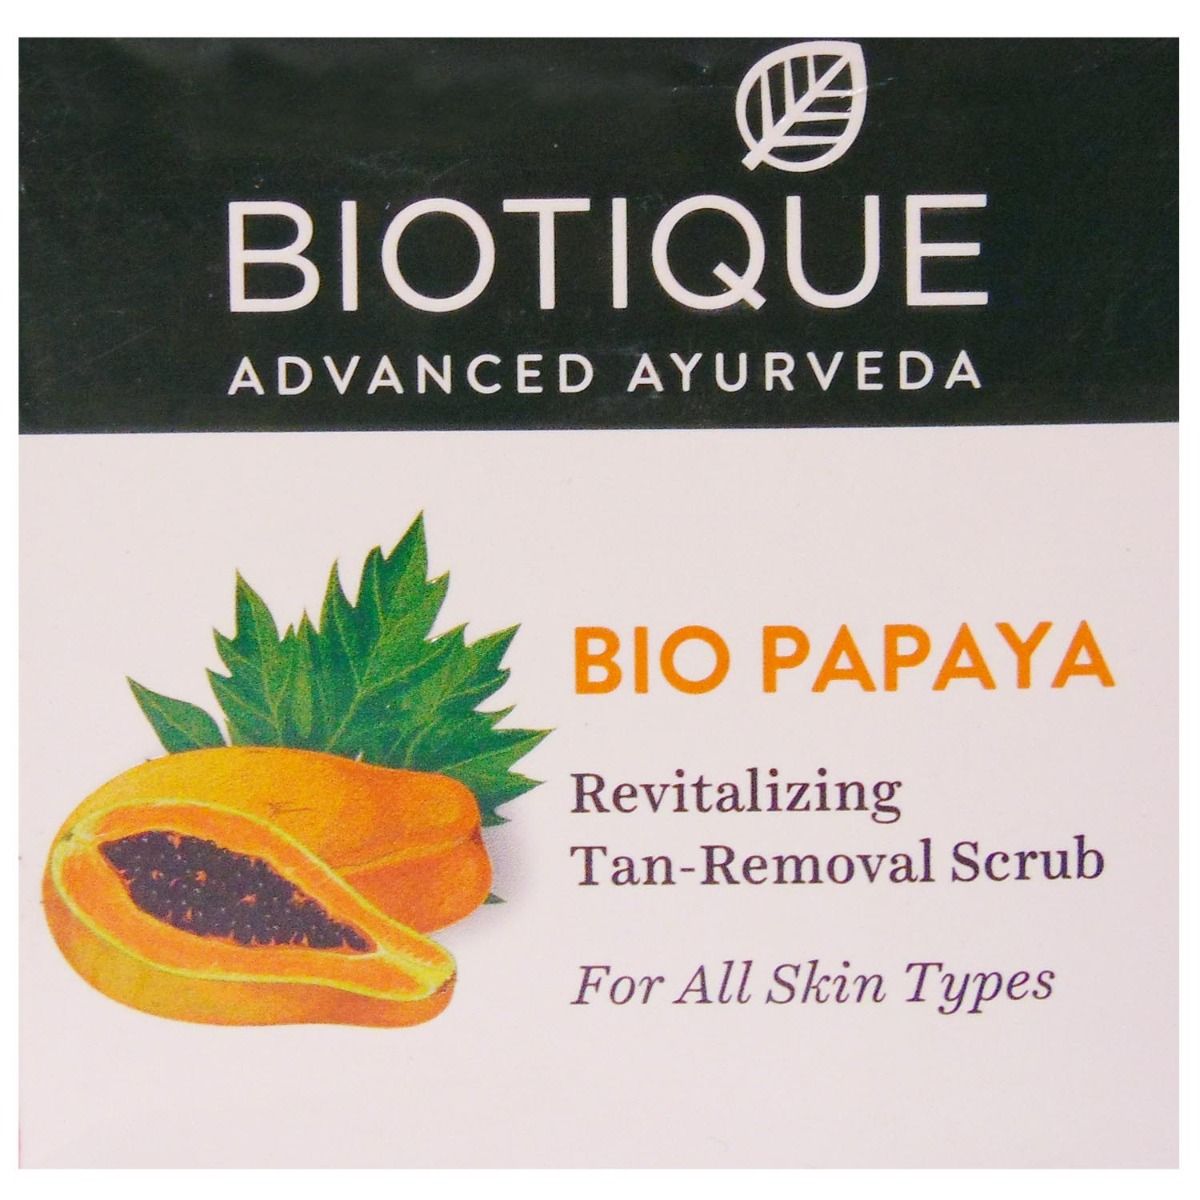 Biotique Bio Papaya Revitalizing Tan-Removal Scrub, 75 gm, Pack of 1 